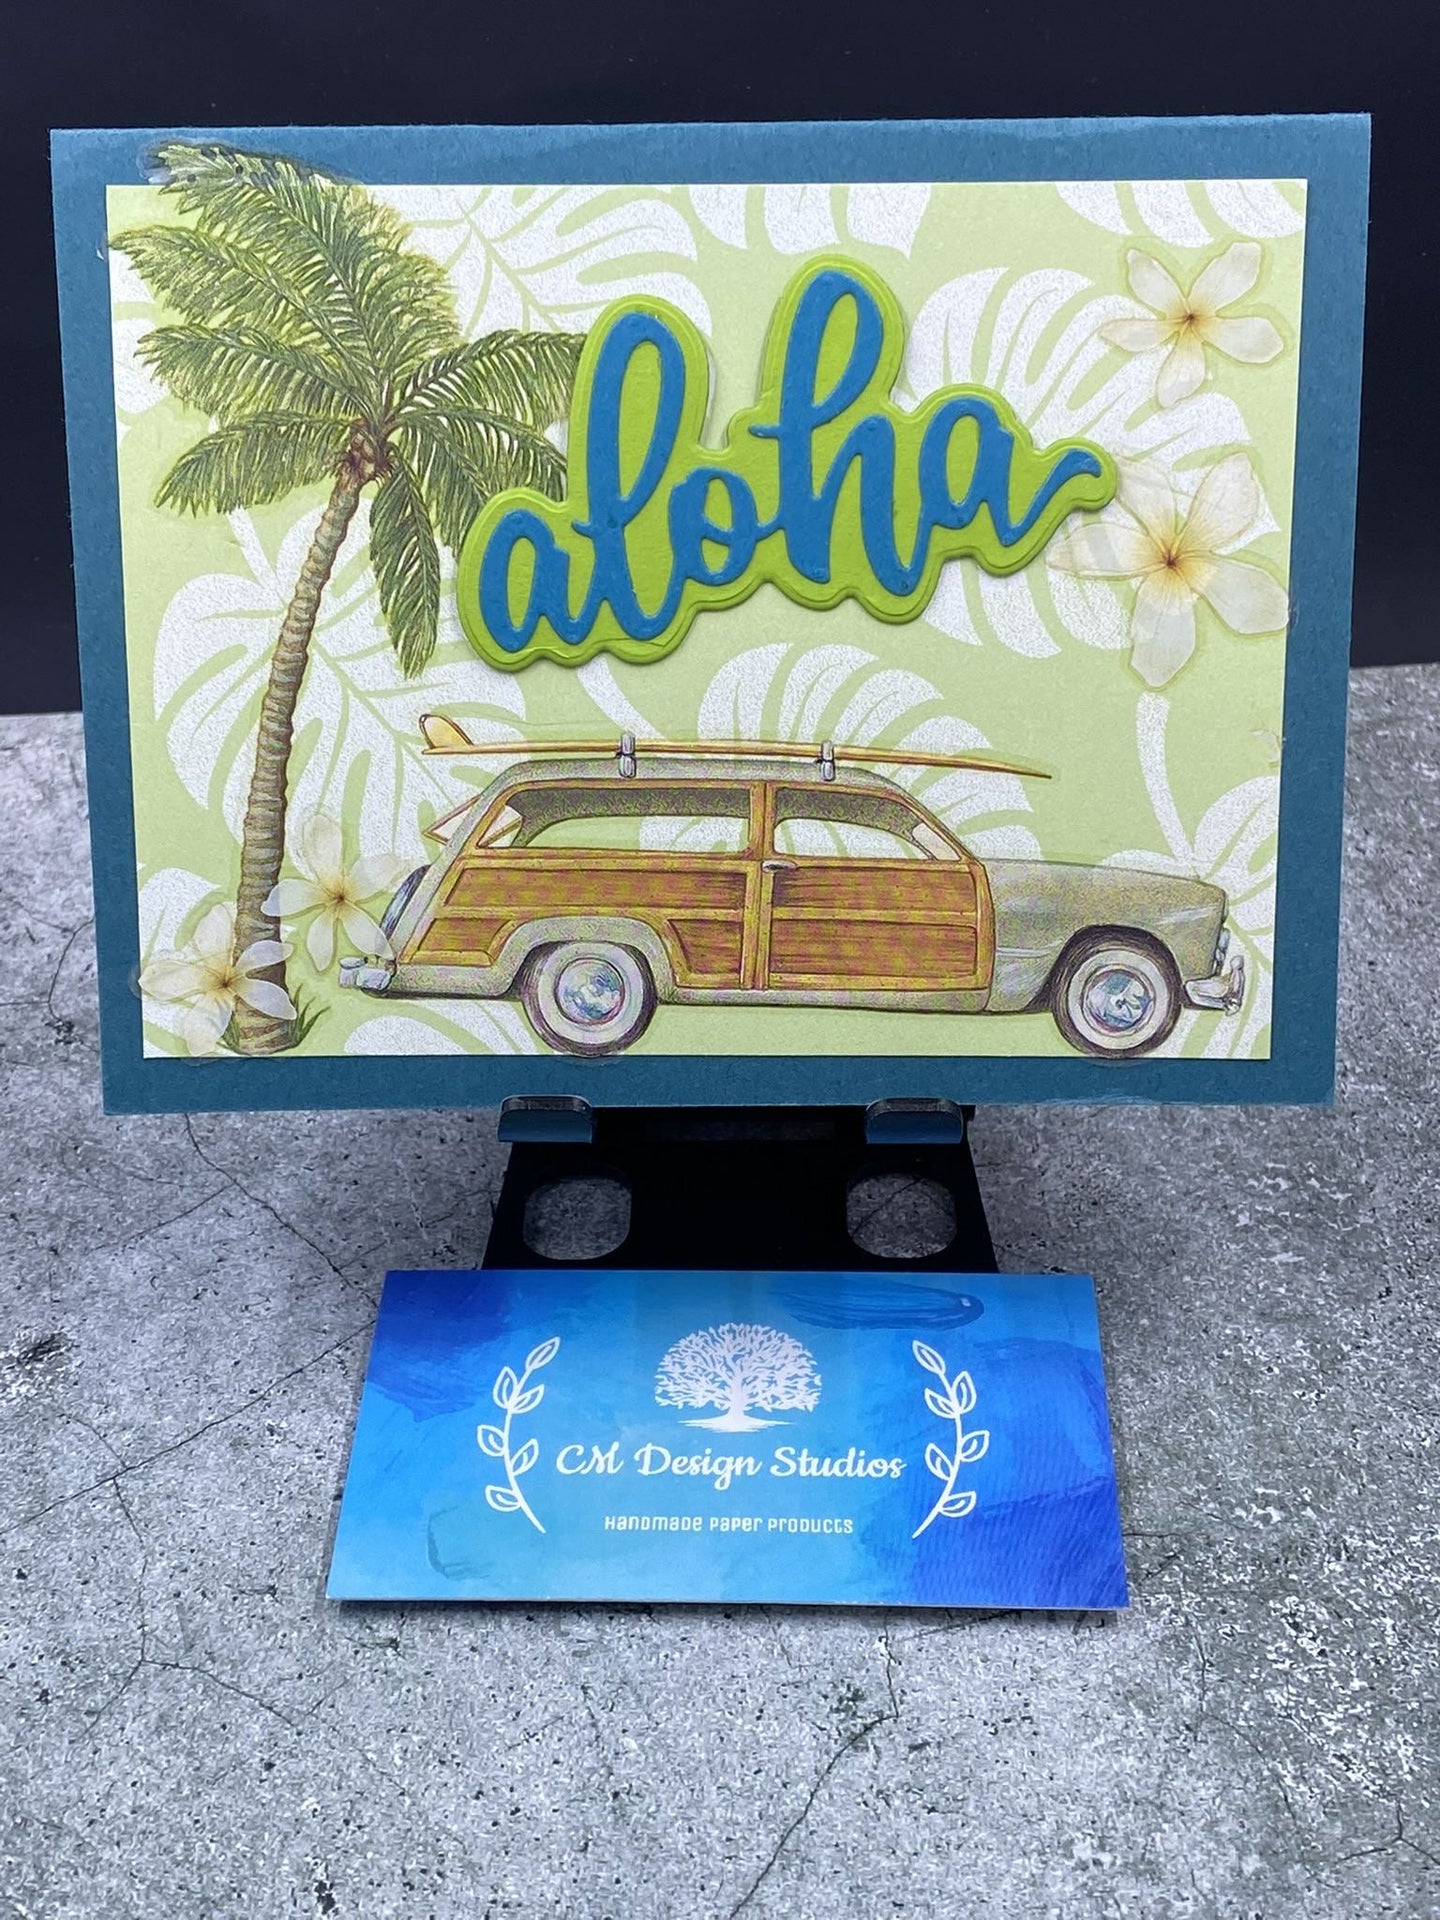 Aloha Card